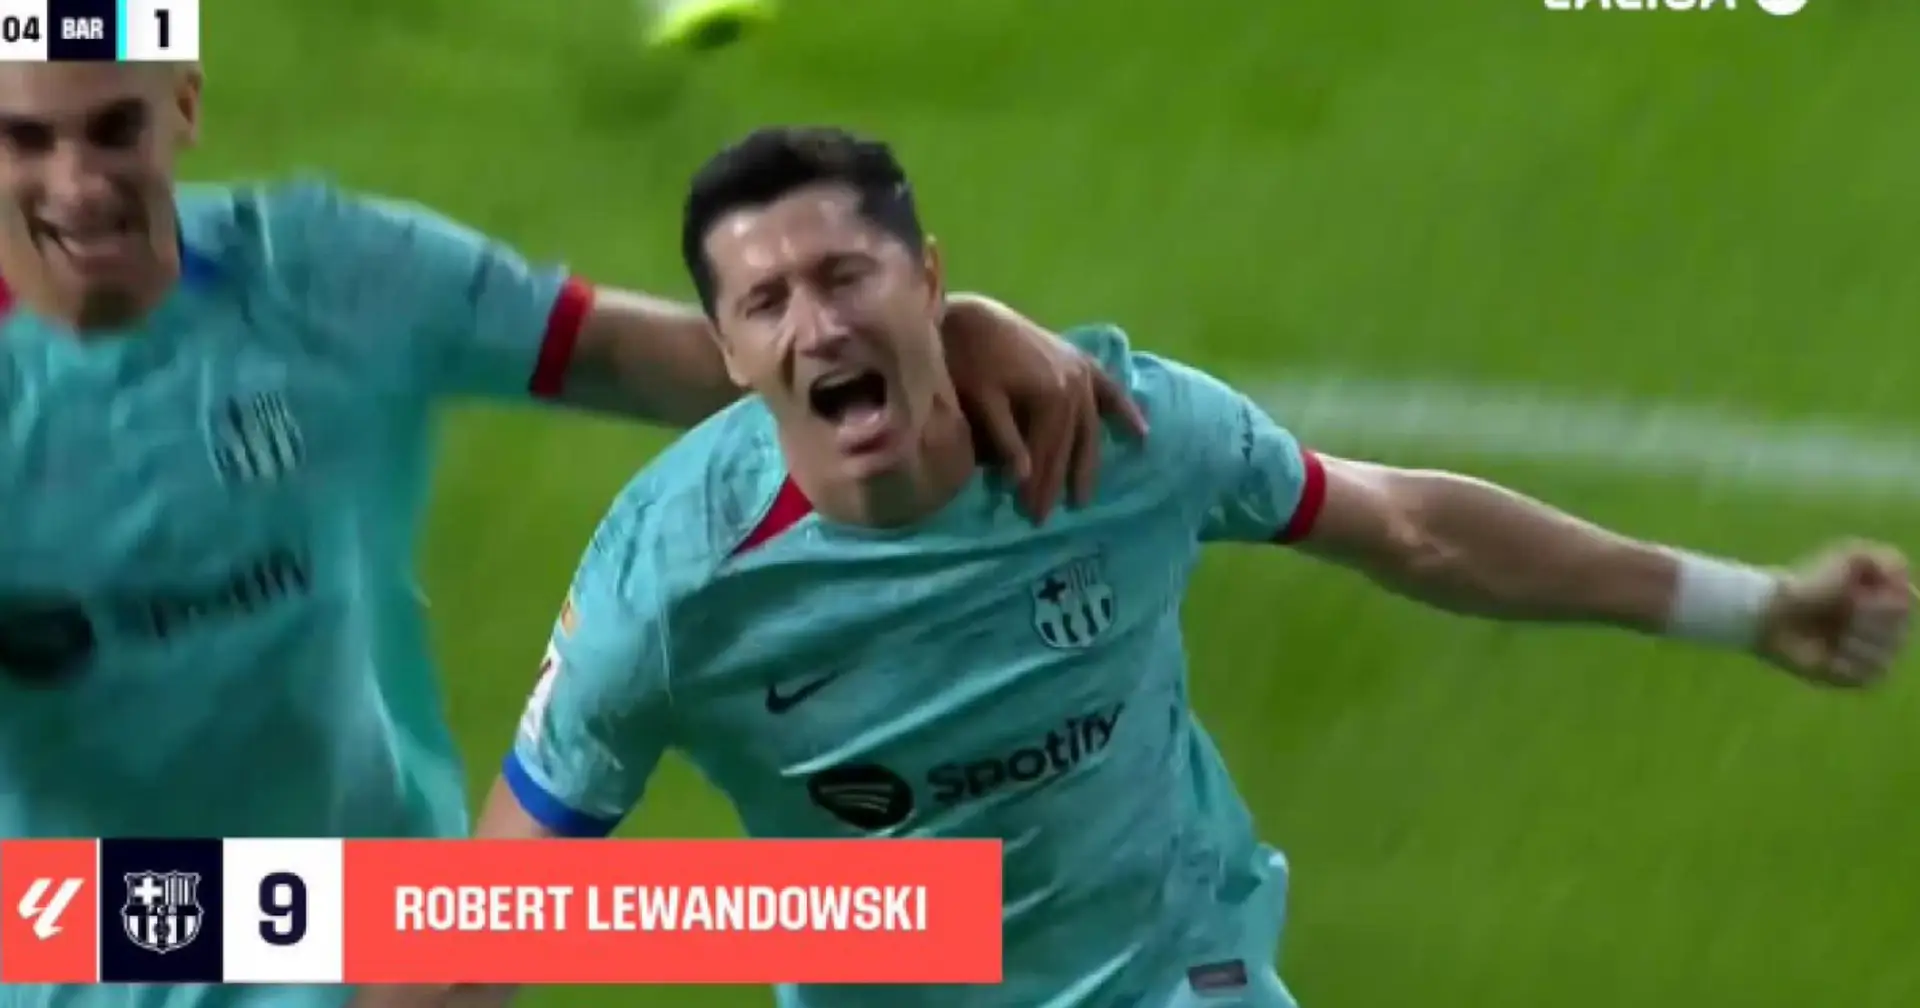 La Liga topscorers ranking – midfielder 1st, Lewandowski 5th